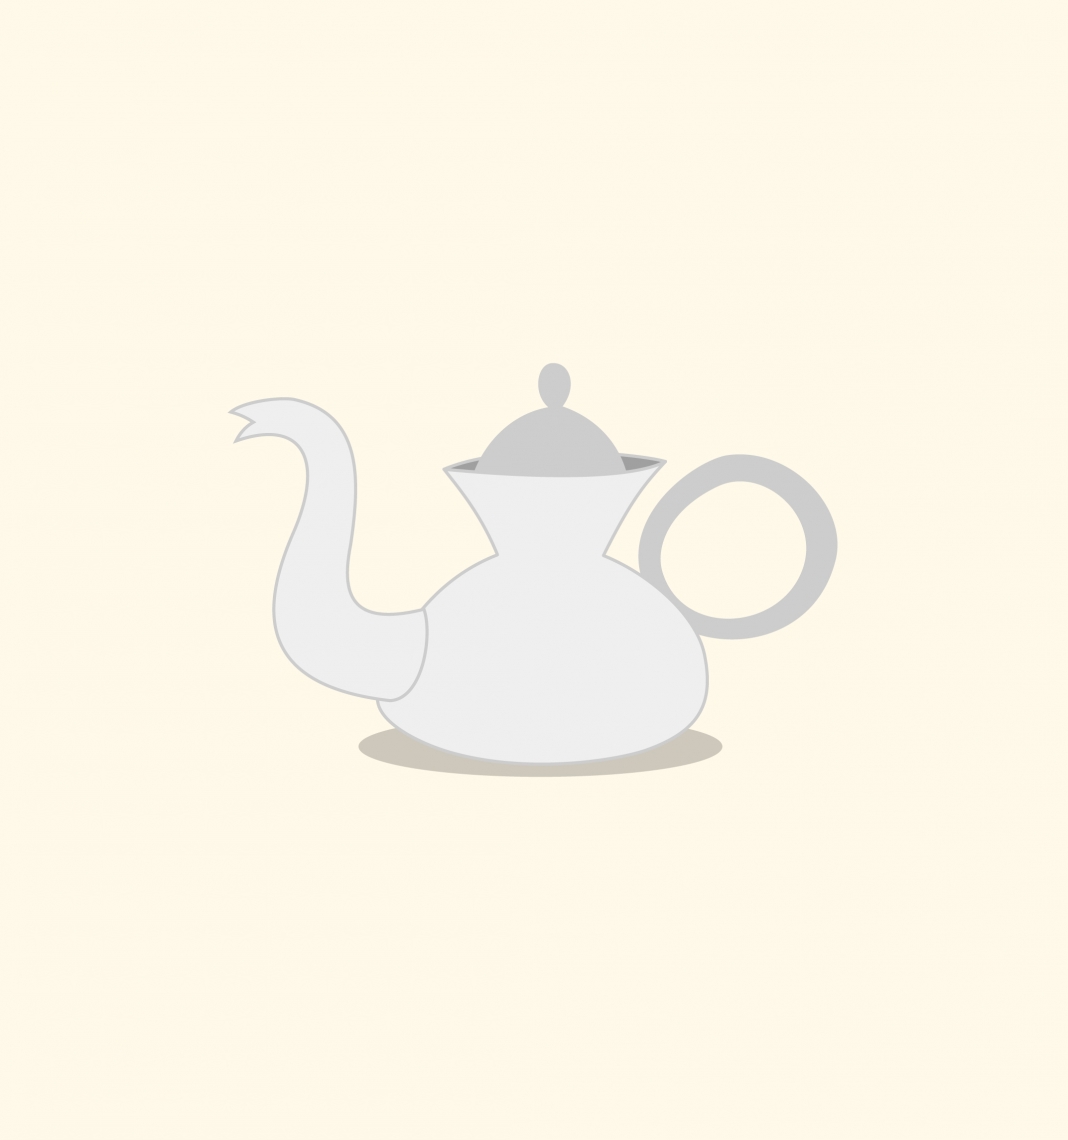 Teapot free vector